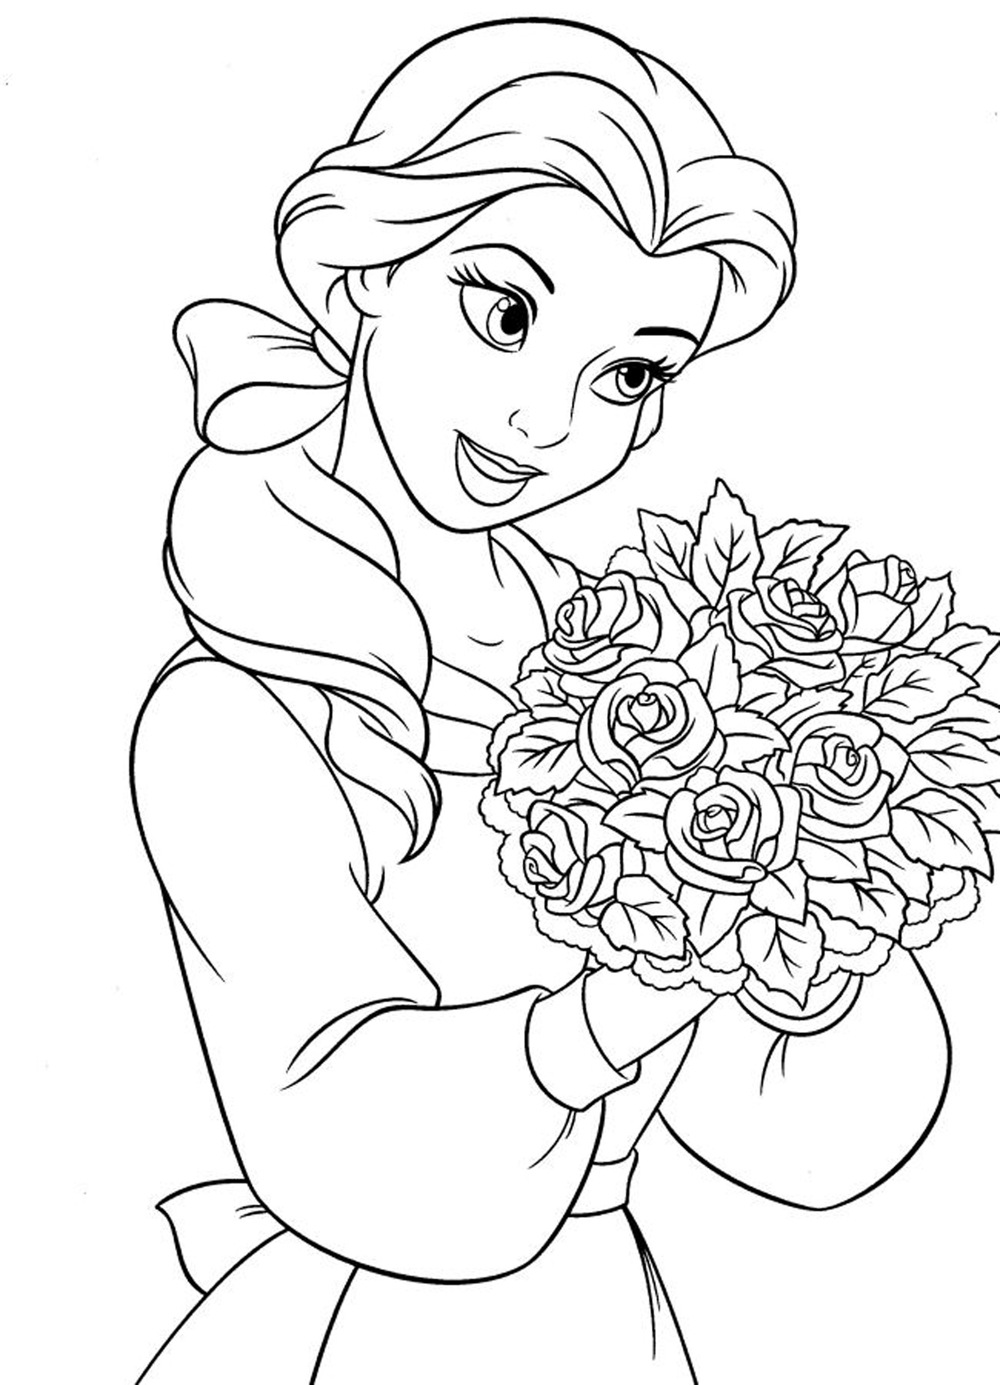 Disney-Princess-Belle-Coloring-Page by Serena7718 on DeviantArt